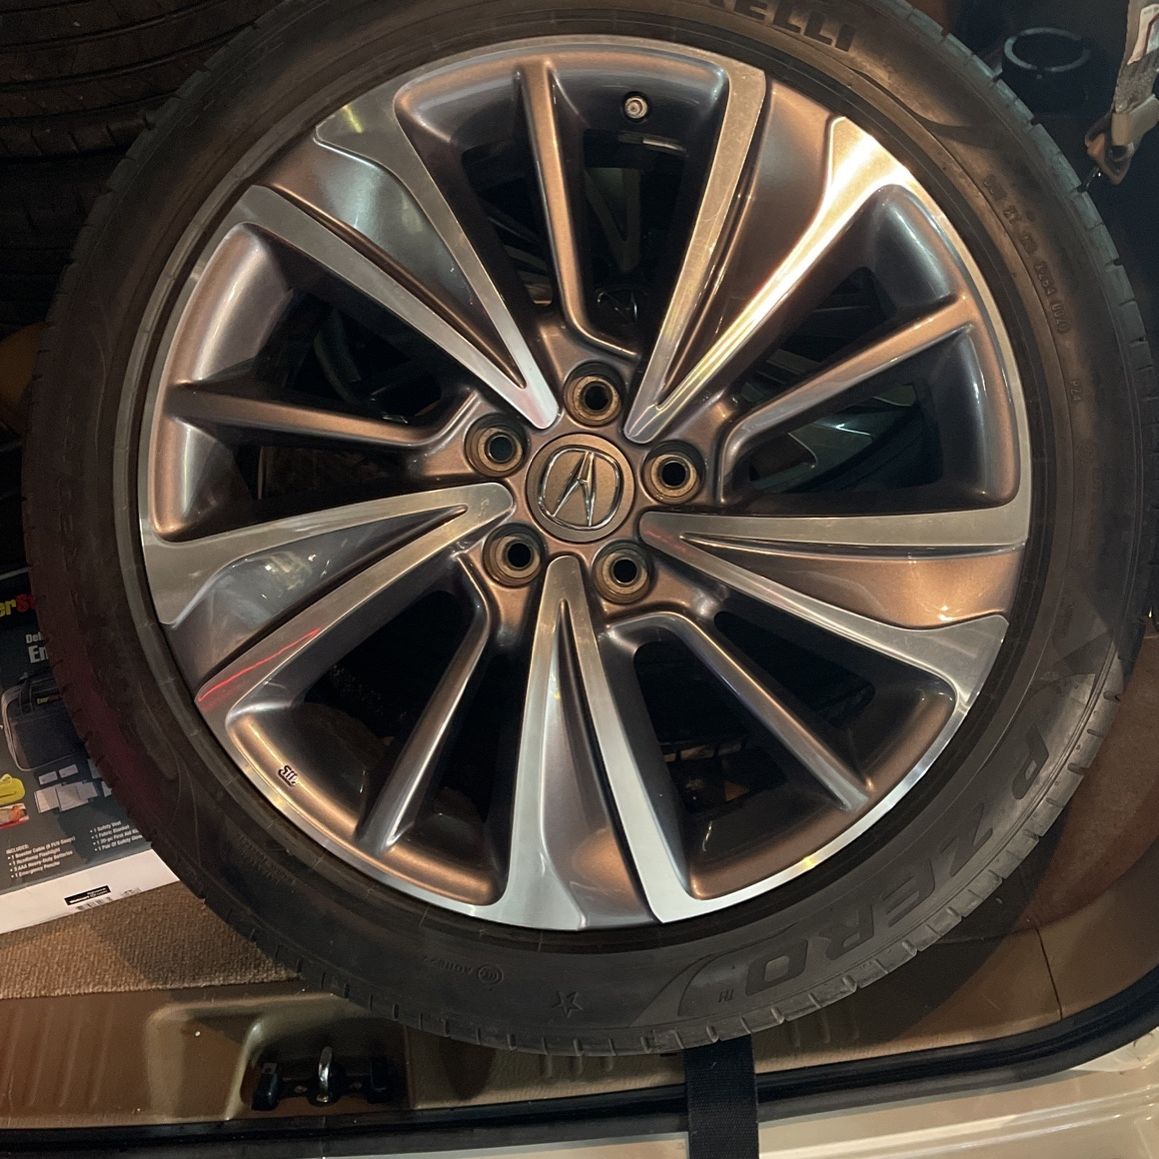 2018 MDX Rims Orginal rims 245/45/20 Tires On Them